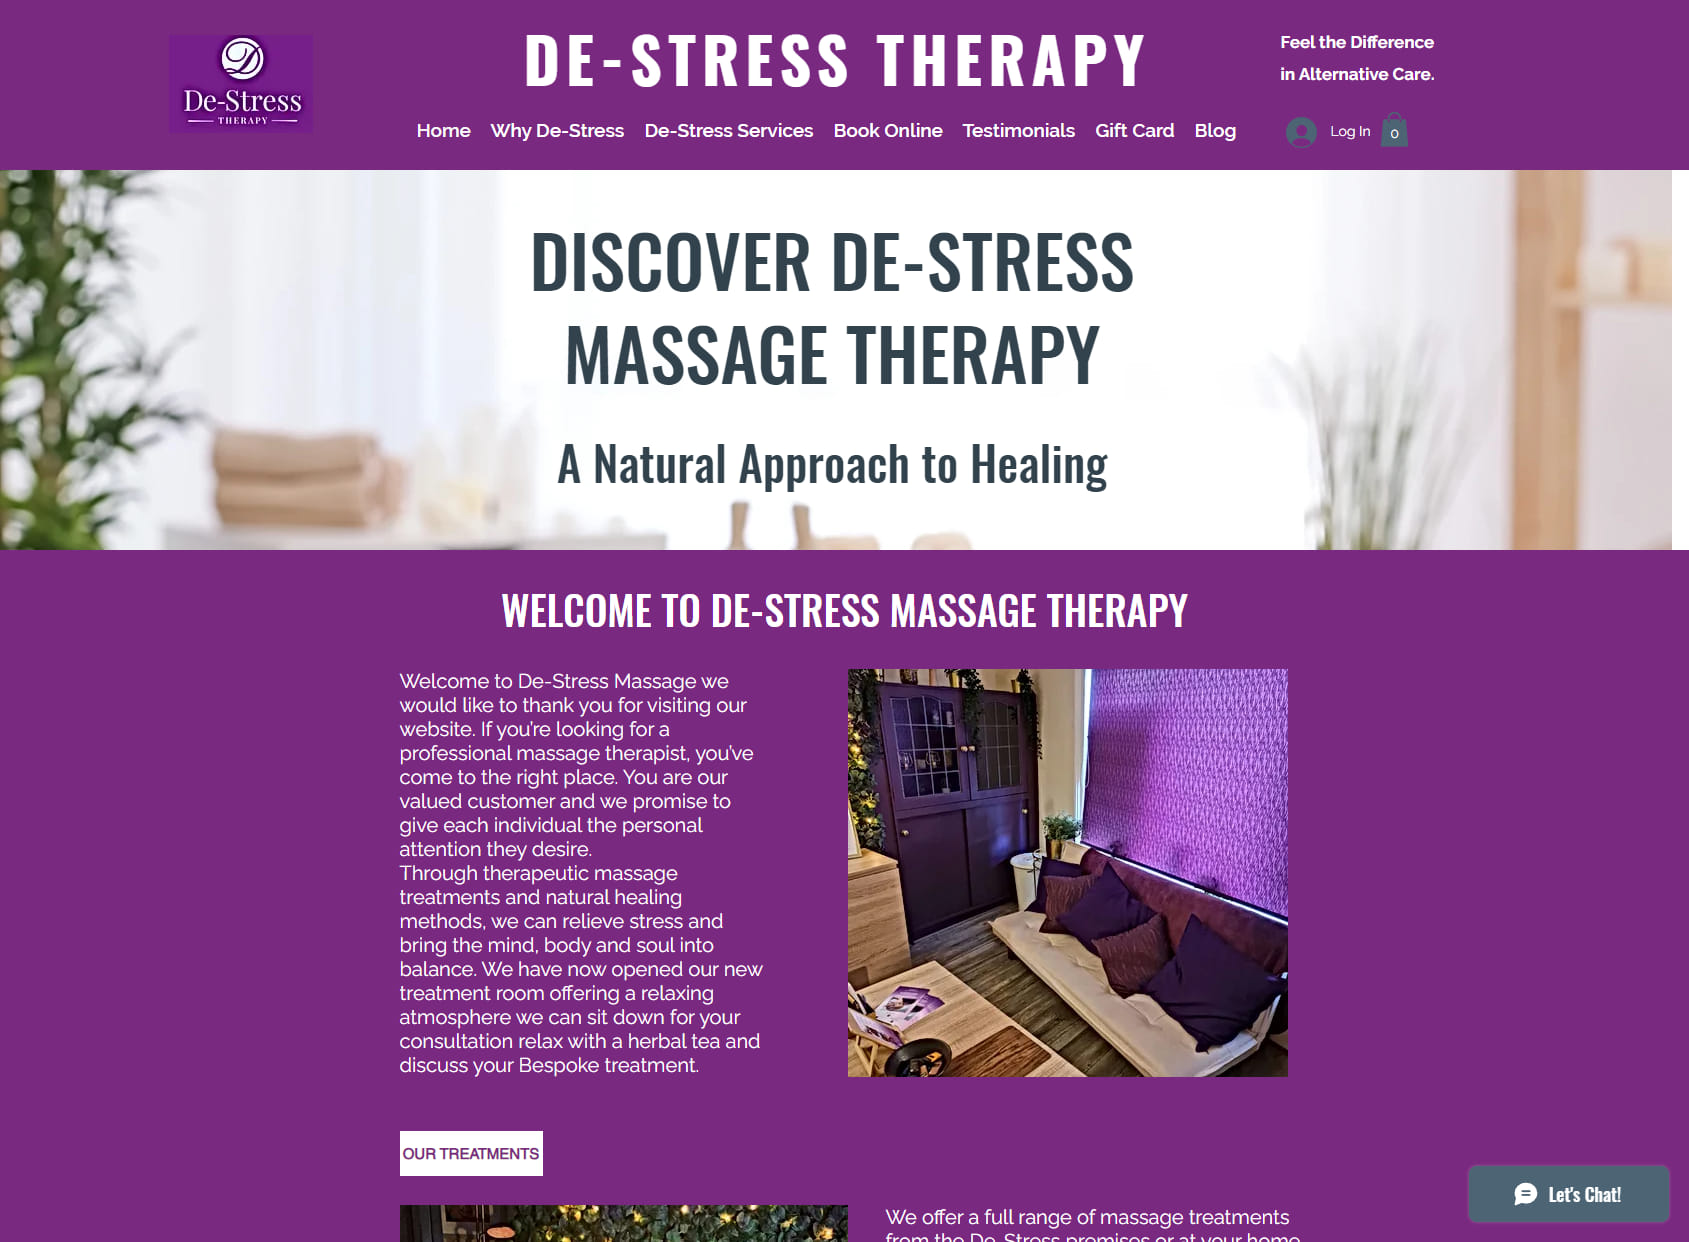 De-Stress Massage Therapy